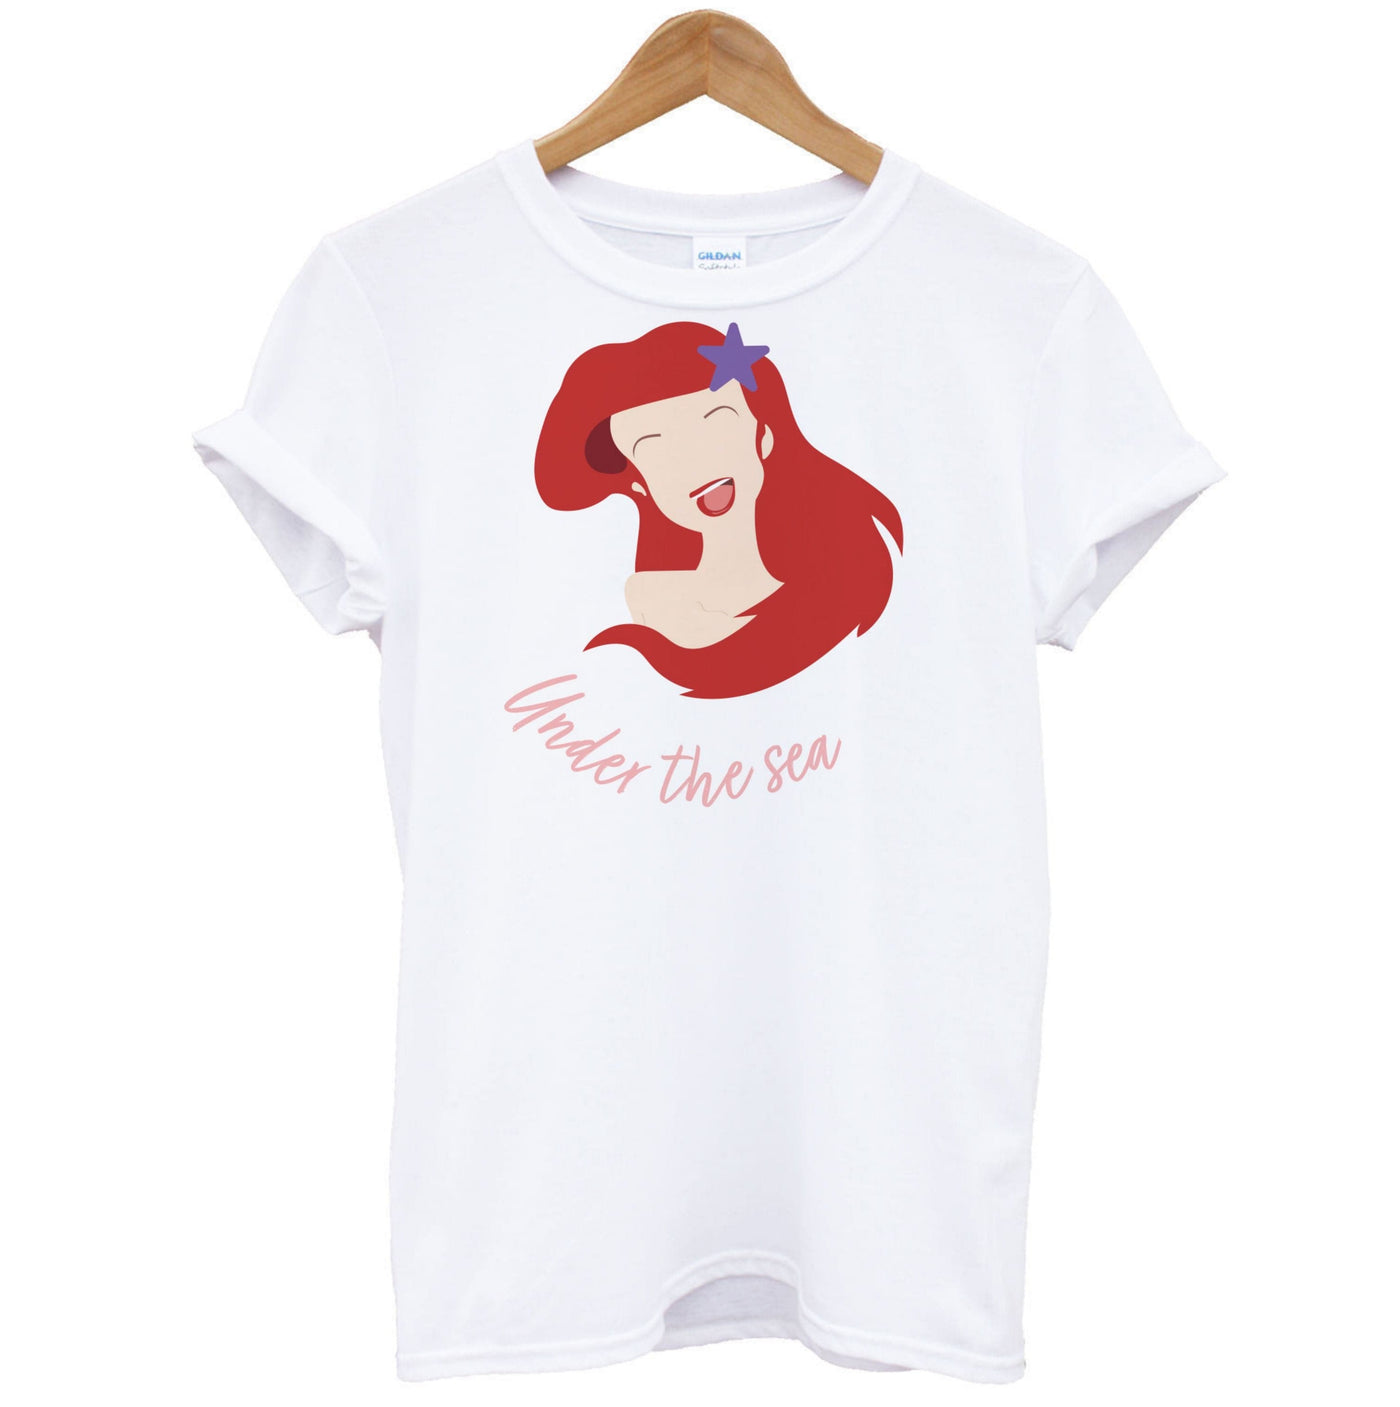 Under The Sea - Ariel The Little Mermaid T-Shirt